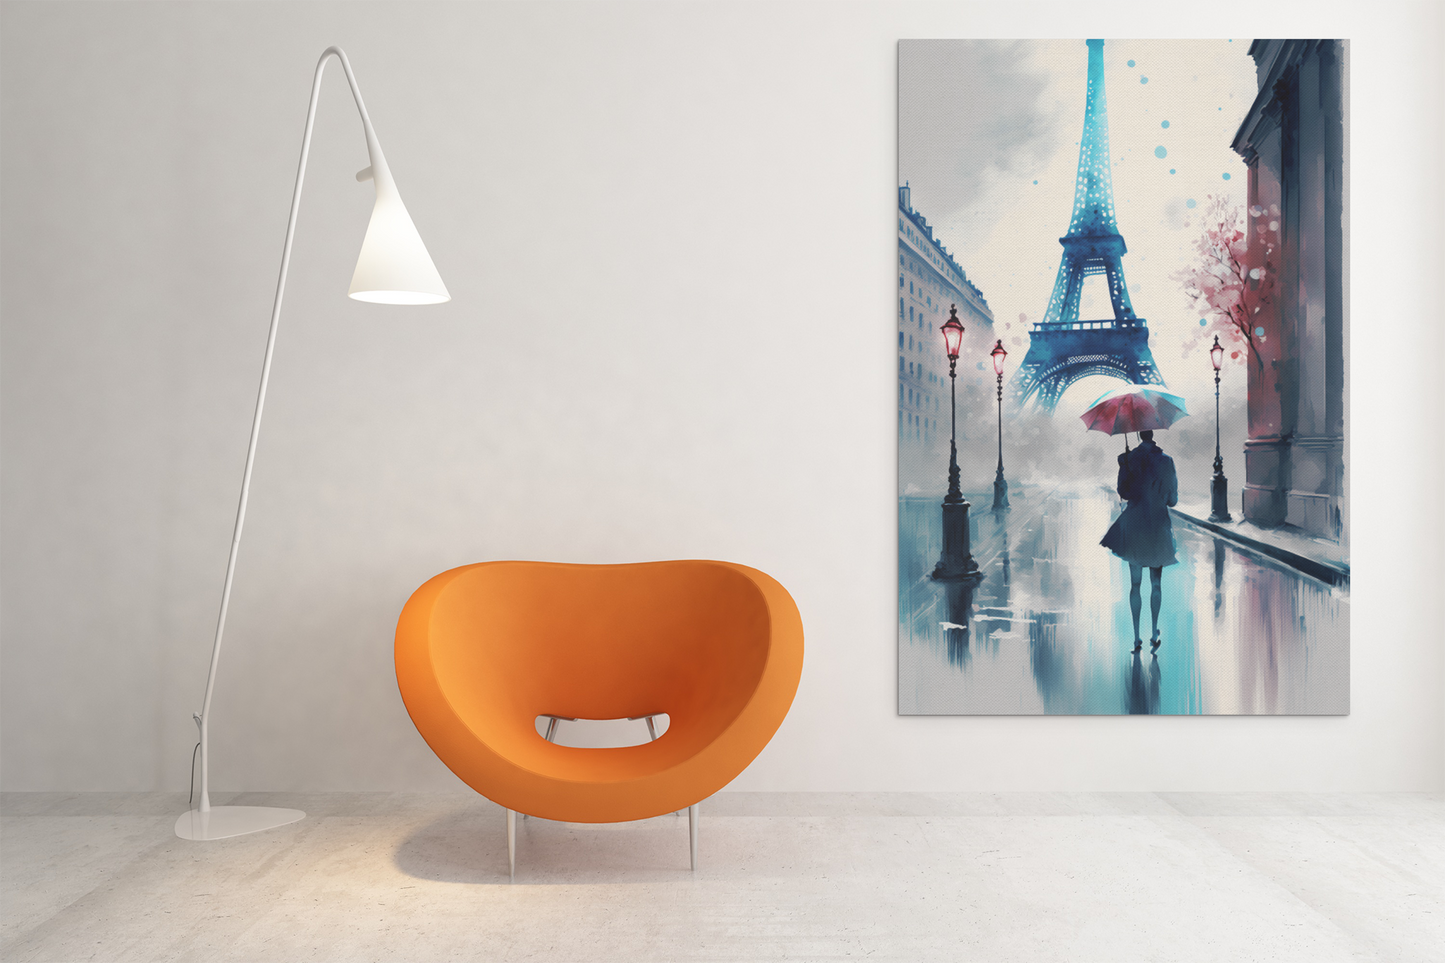 Parisian Romance - Lady with Umbrella - Satin Posters